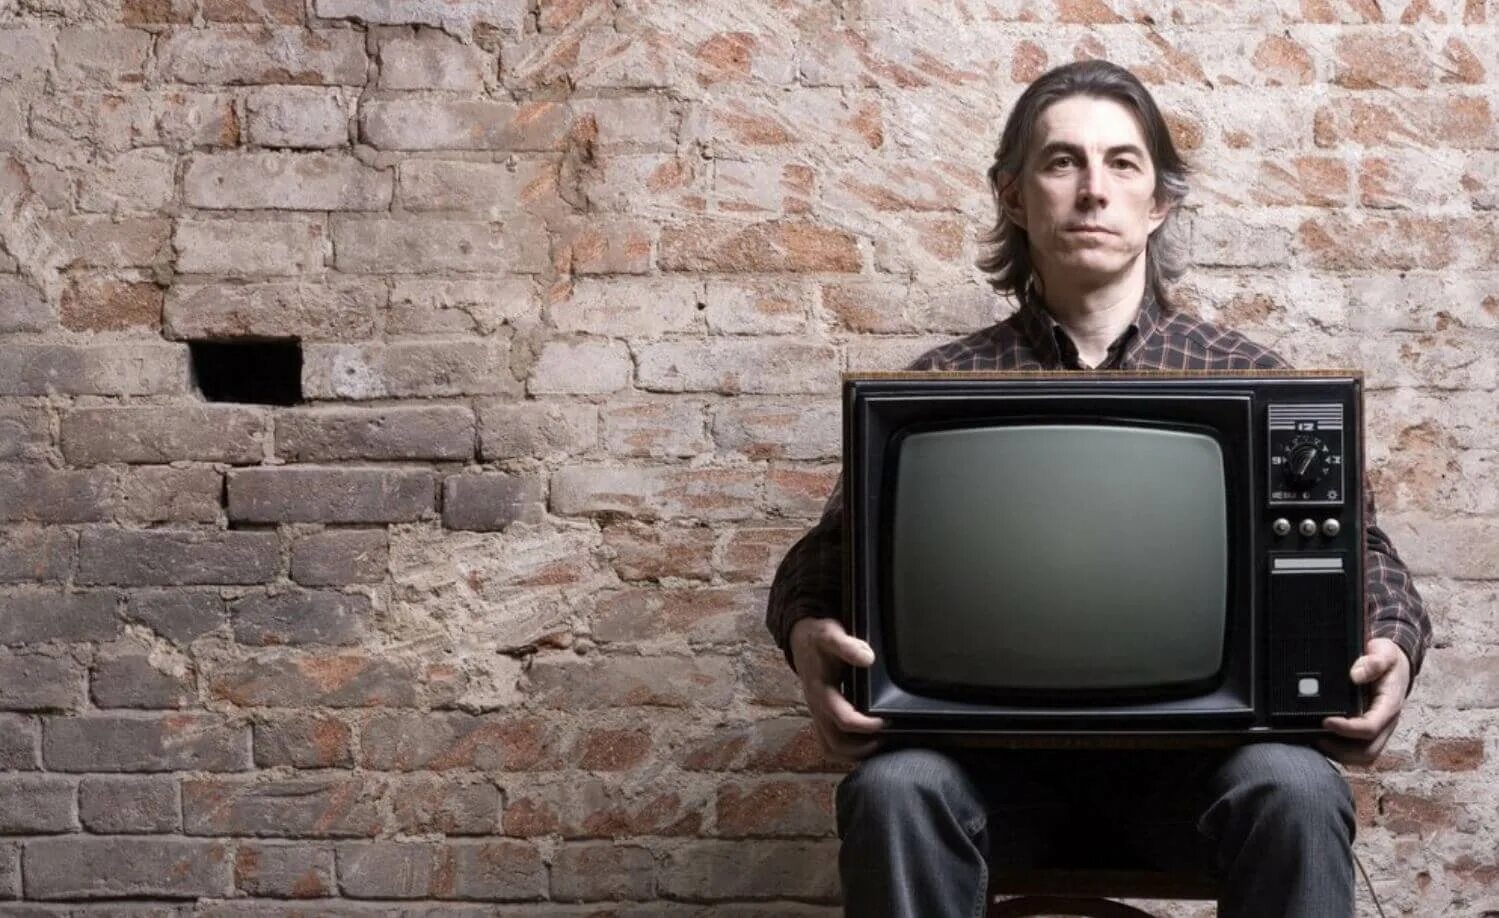 Человек телевизор. Фотосессия с телевизором. Человек держит телевизор. Ручной телевизор.